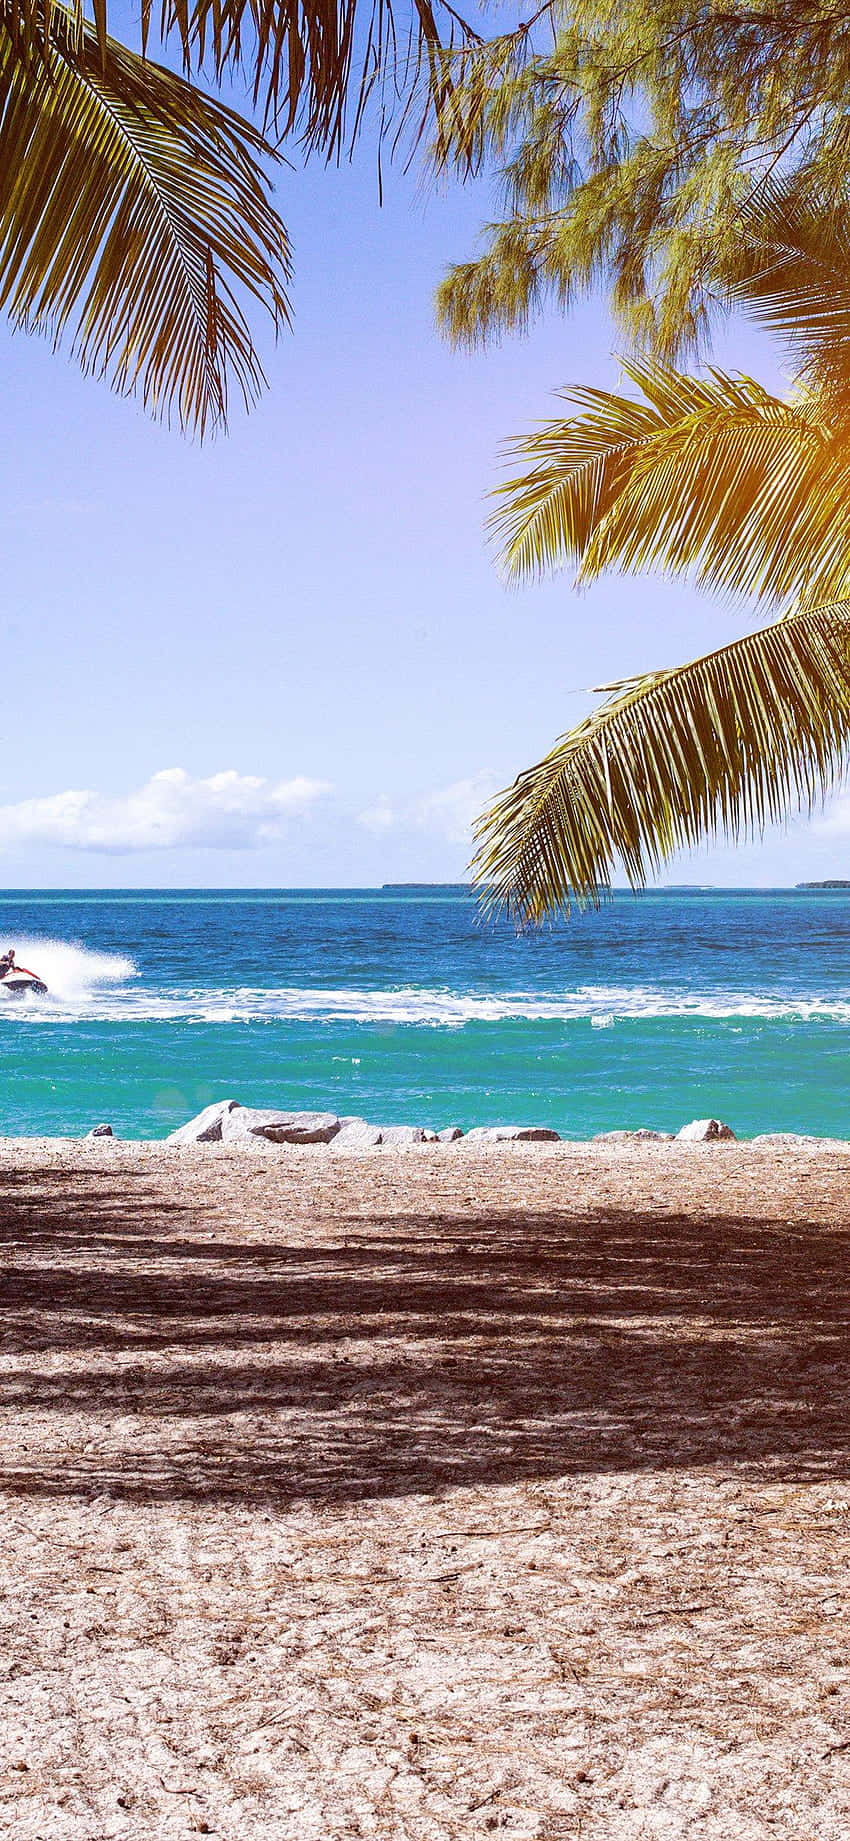 A Beach With Palm Trees And A Beach Ball Wallpaper